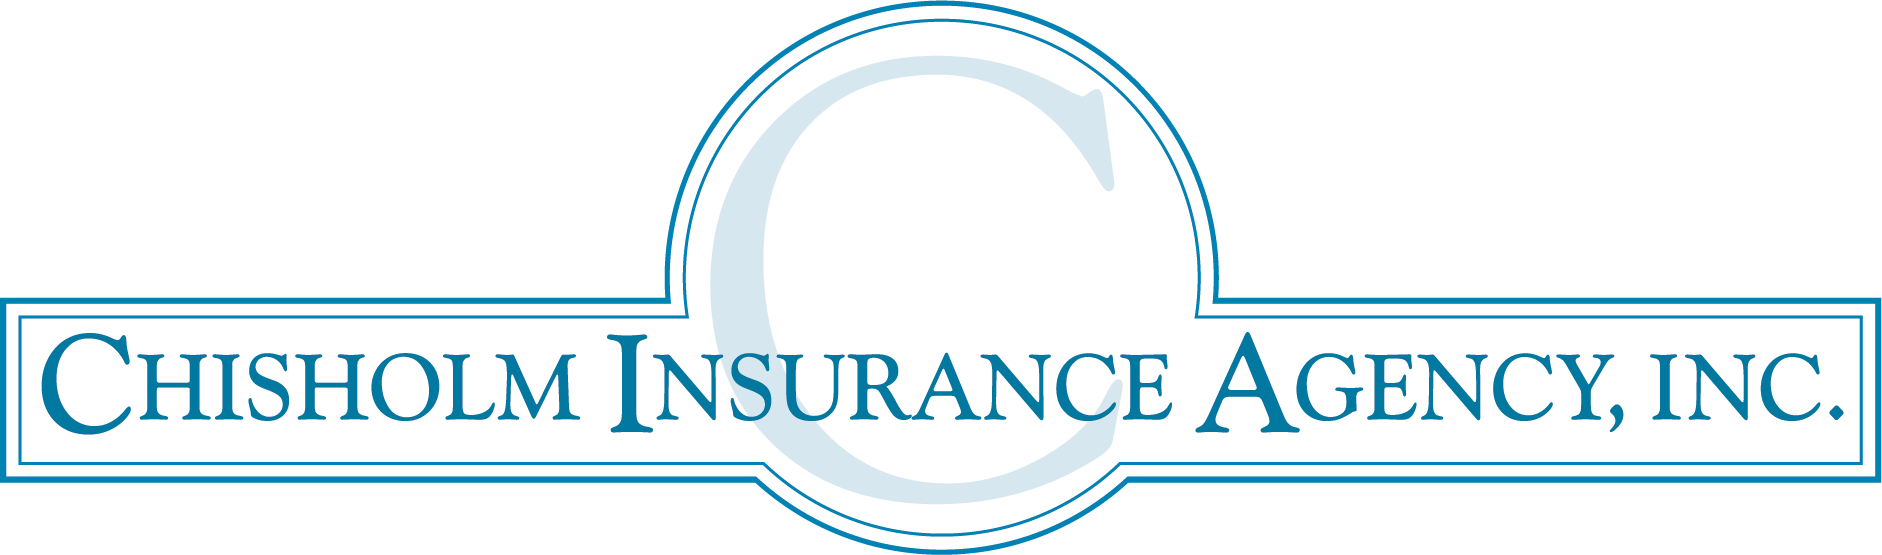 Chisholm Insurance Agency, Inc.